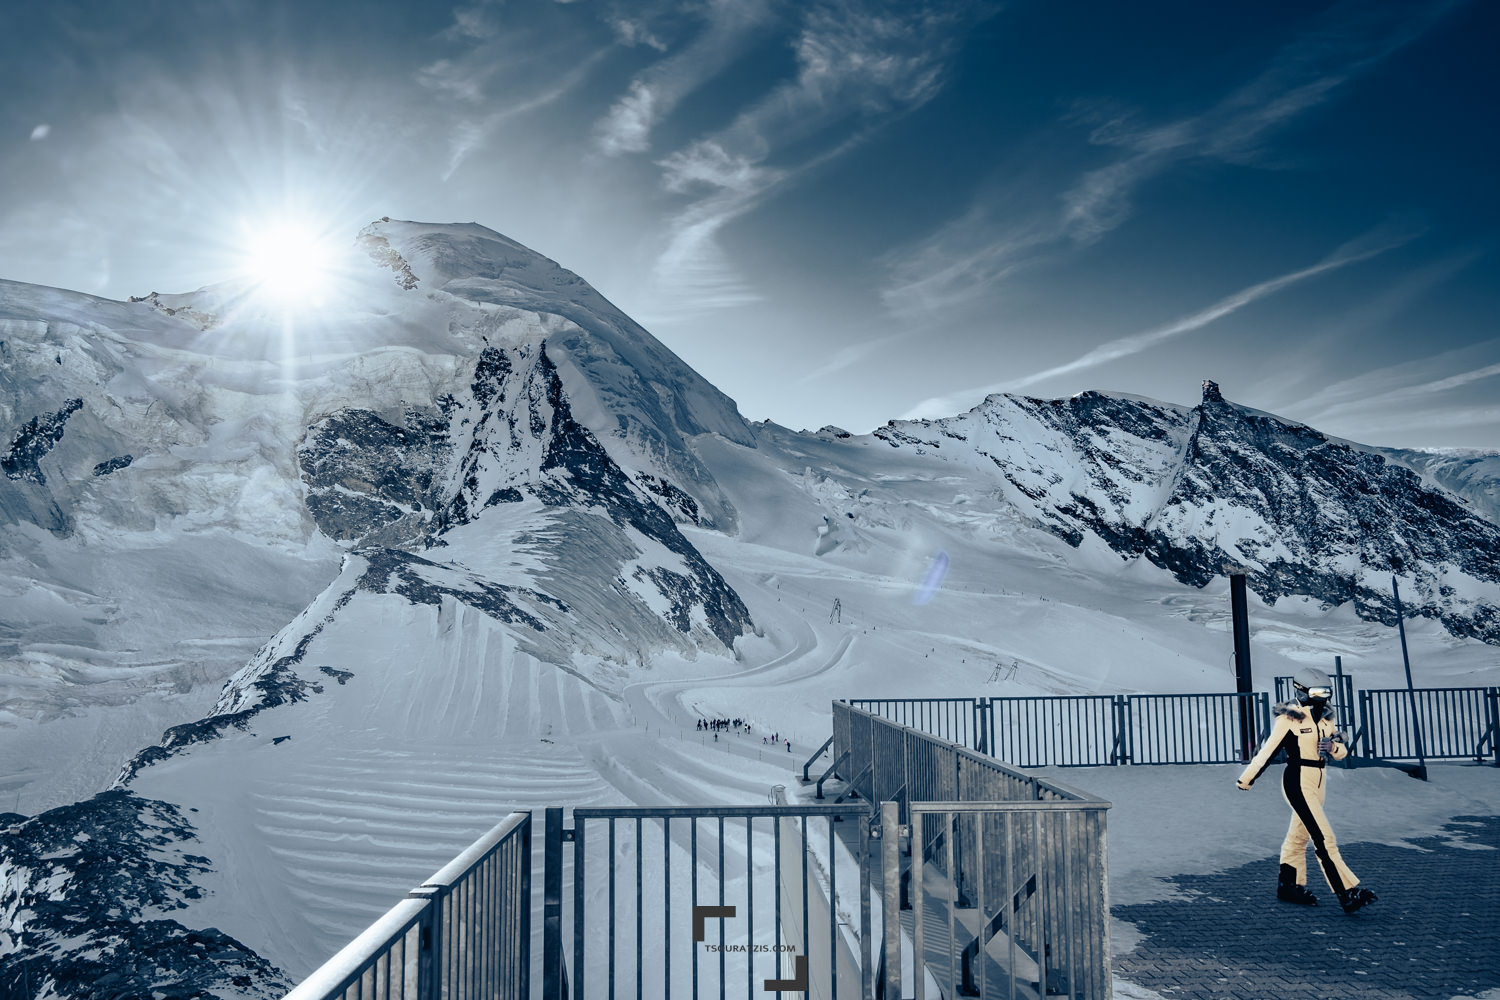 Mittelallalin Mitealalin at 3,500 meters, Saas-Fee ski station, Swiss Alps